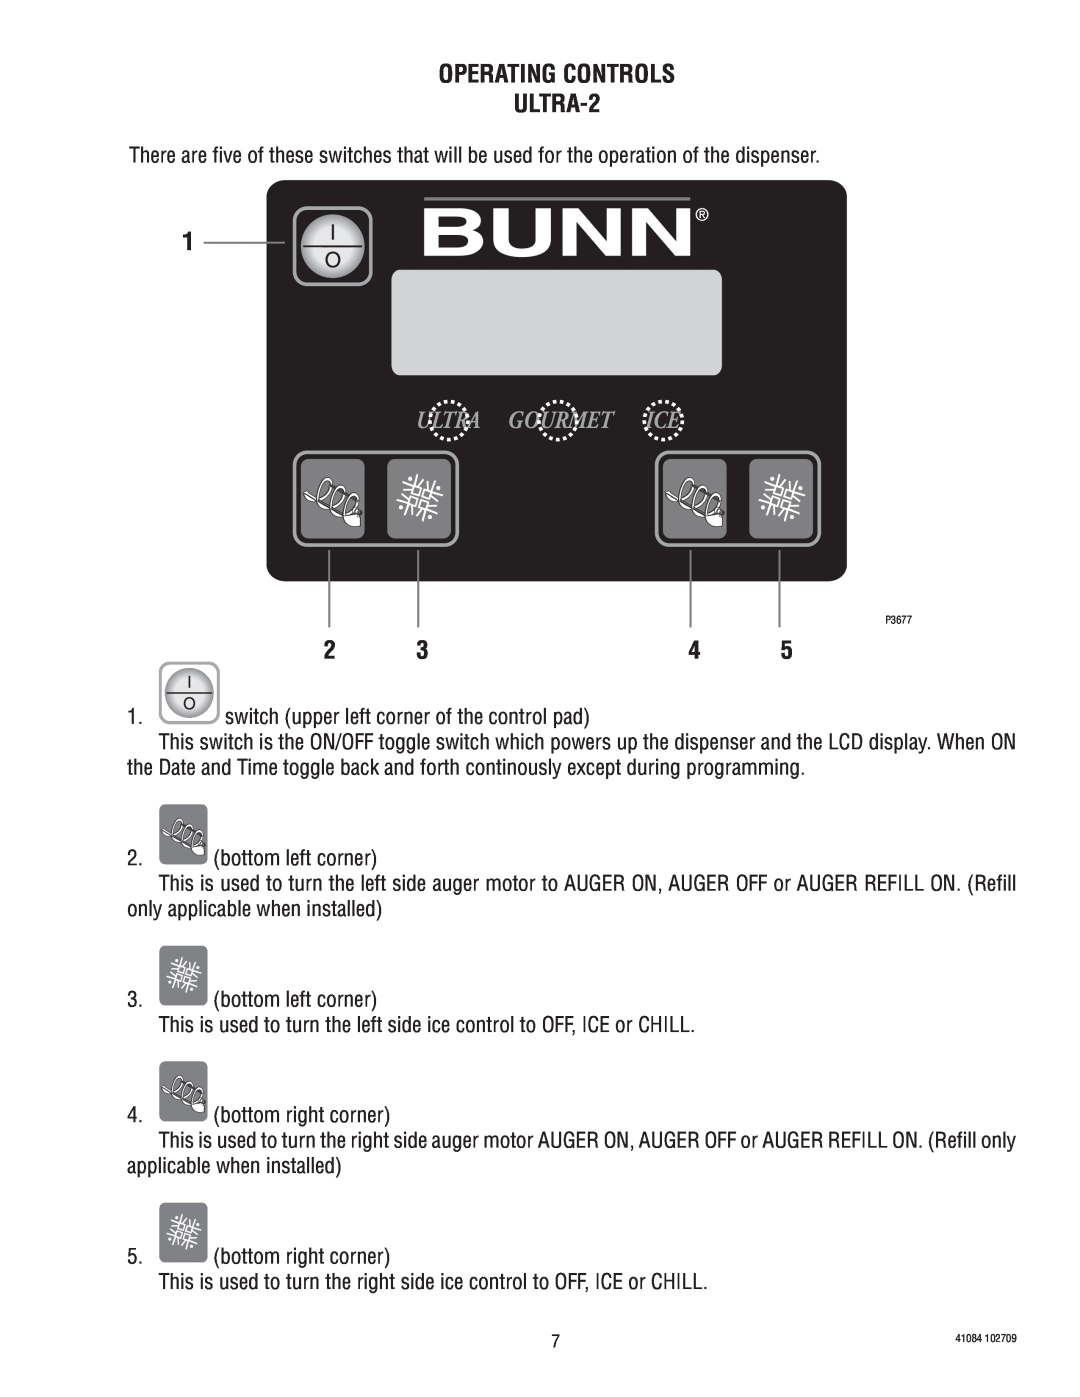 Bunn ULTRA-1 manual OPERATING CONTROLS ULTRA-2 